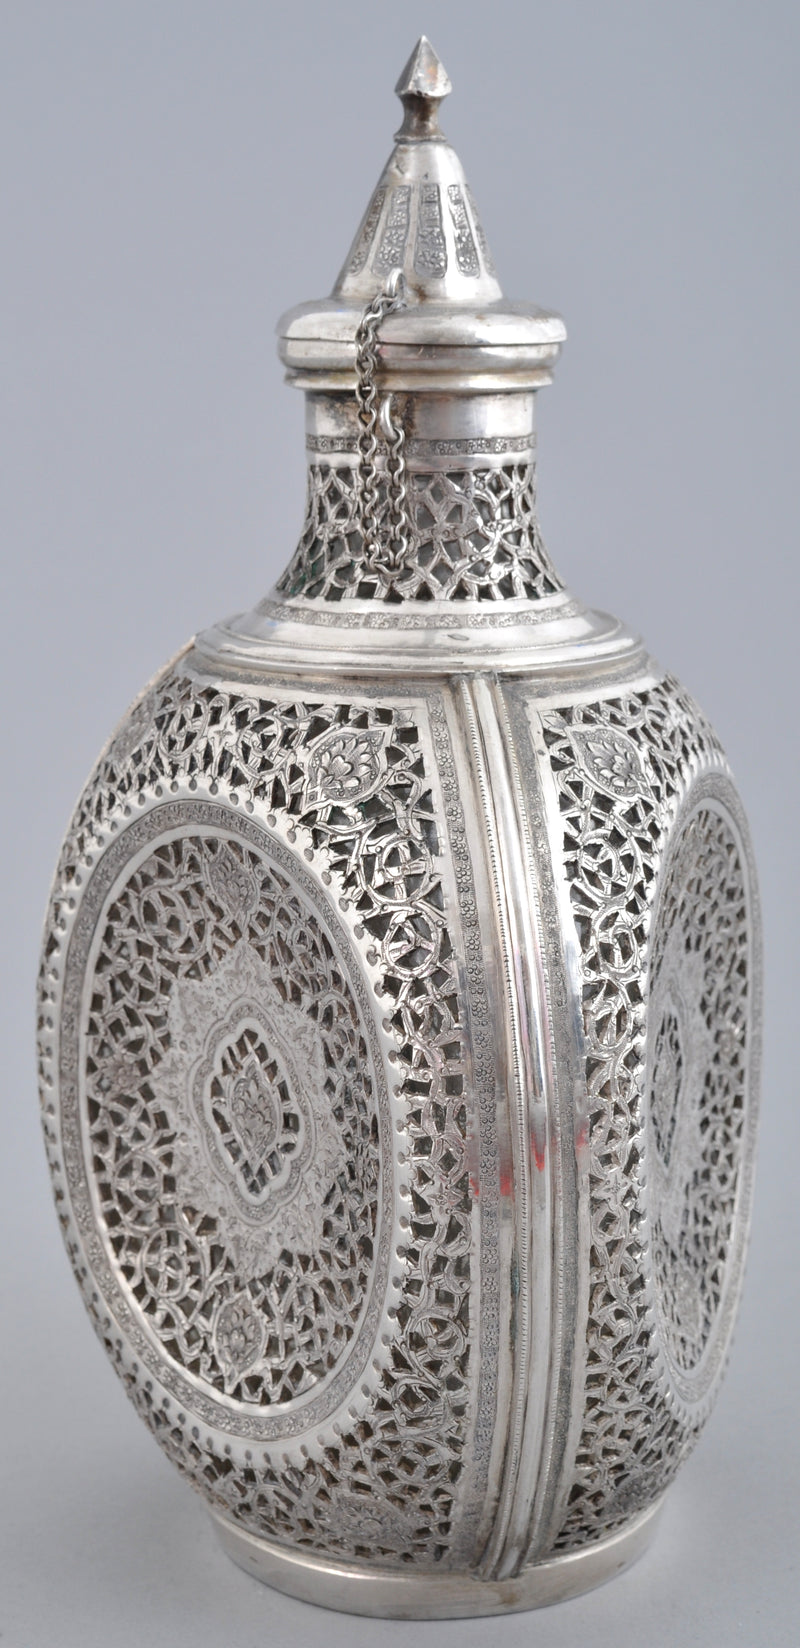 Antique Persian Arab Sterling Silver Flask, Circa 1900